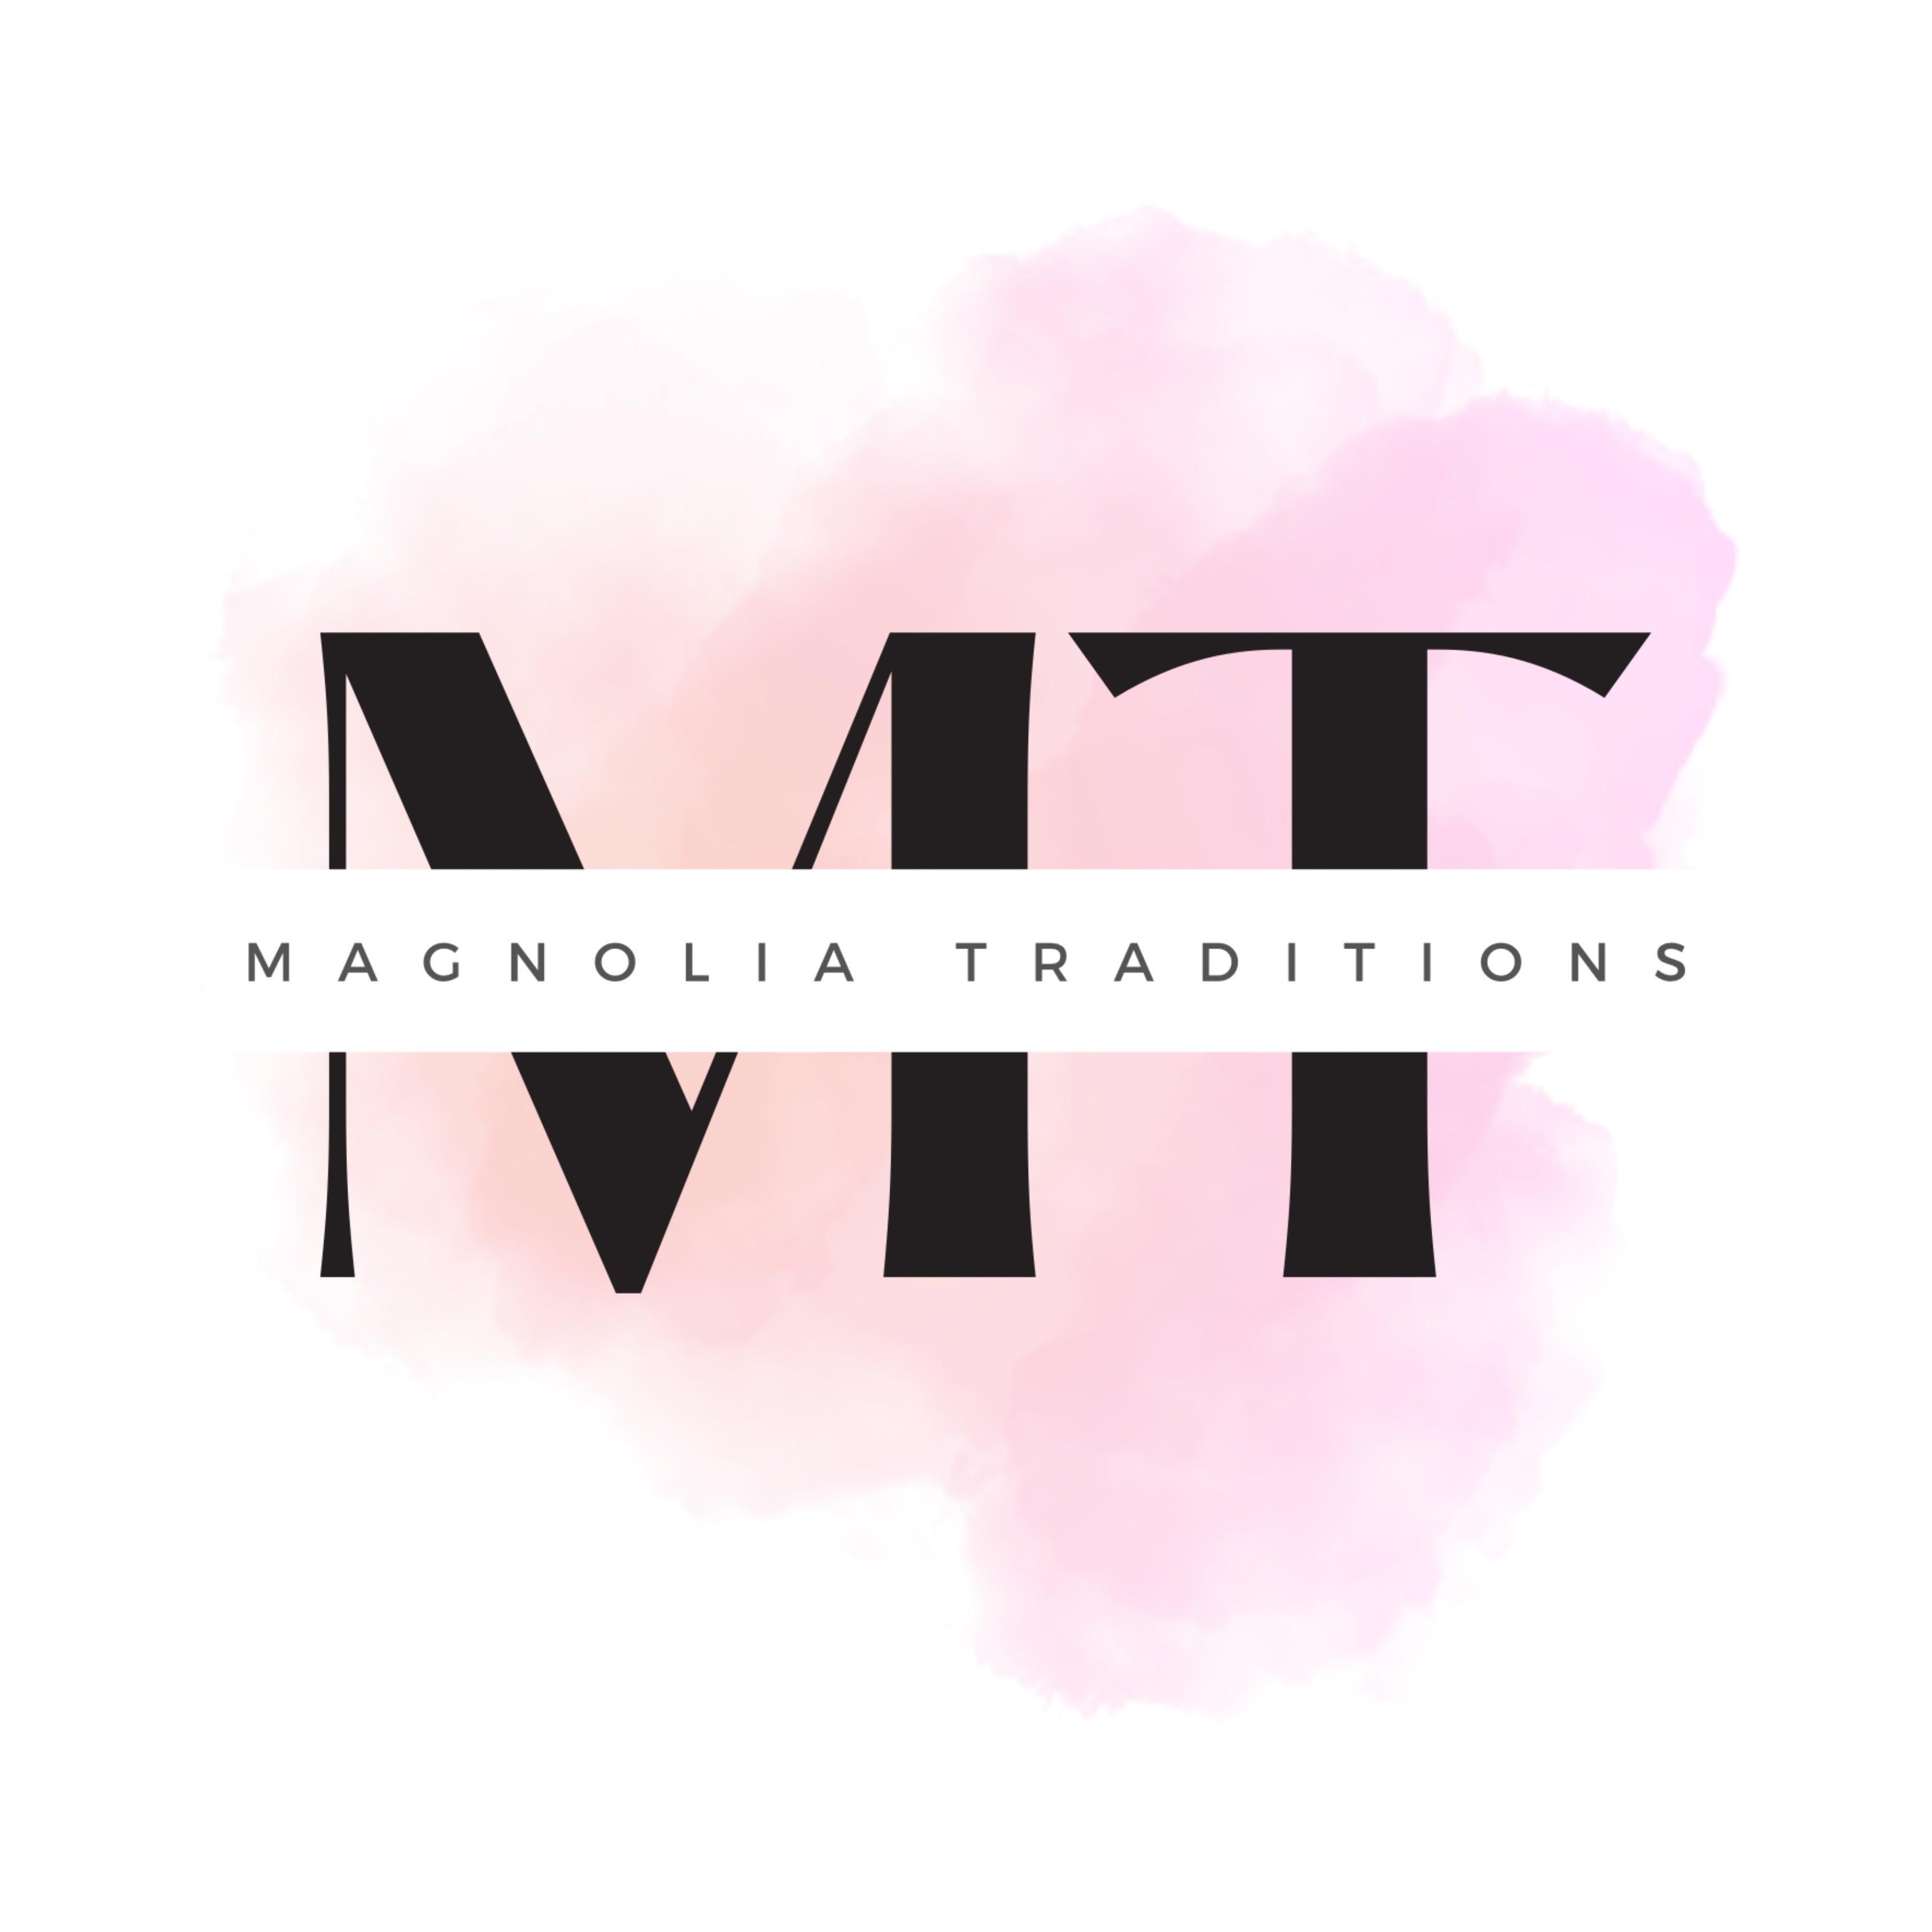 Magnolia Traditions